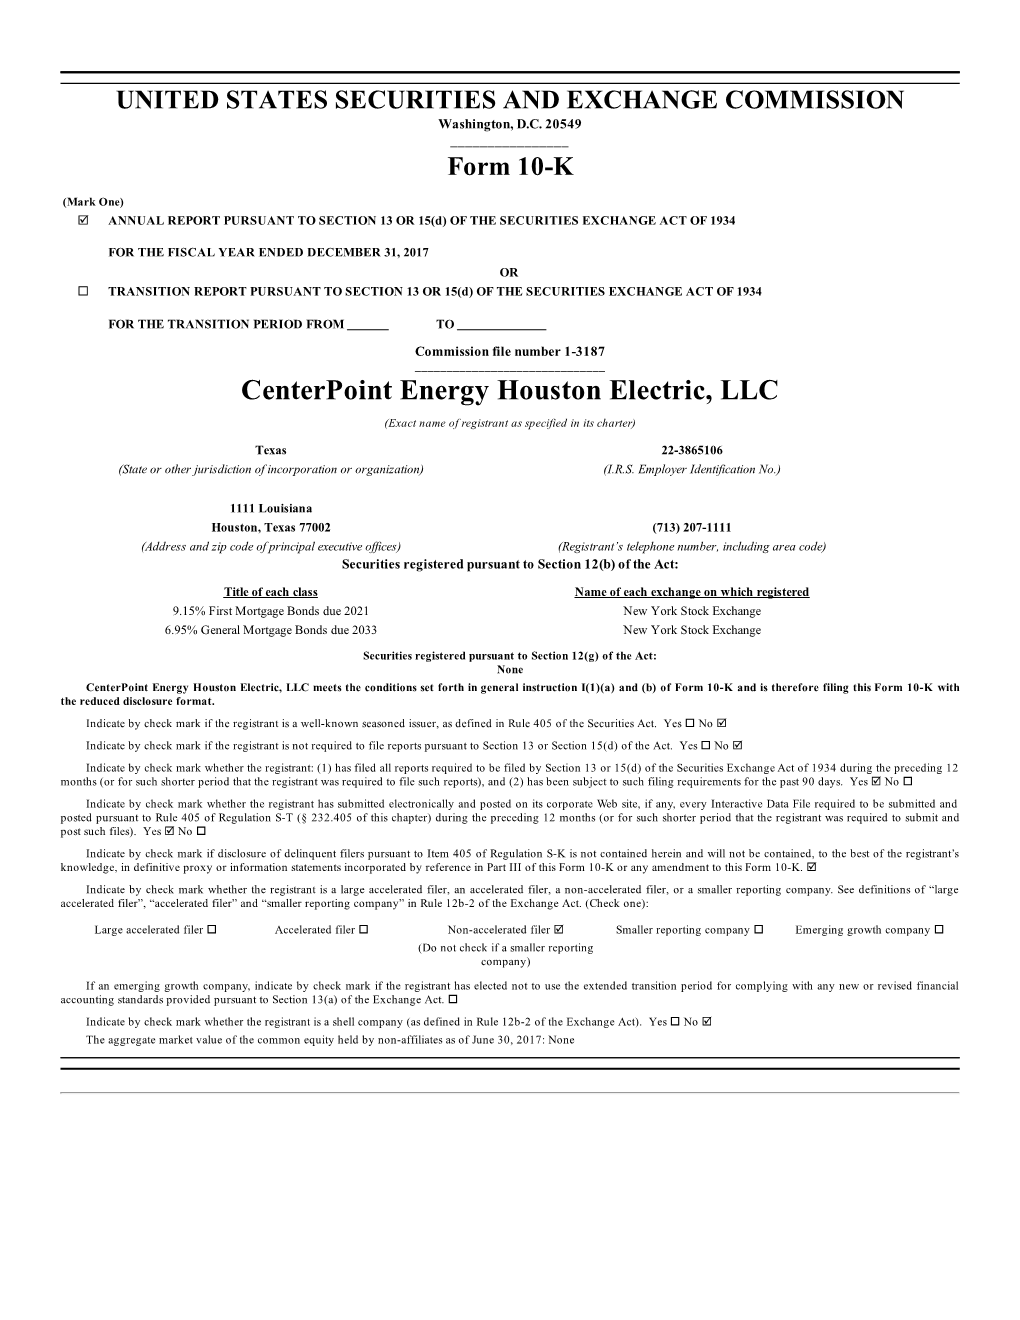 Centerpoint Energy Houston Electric, LLC